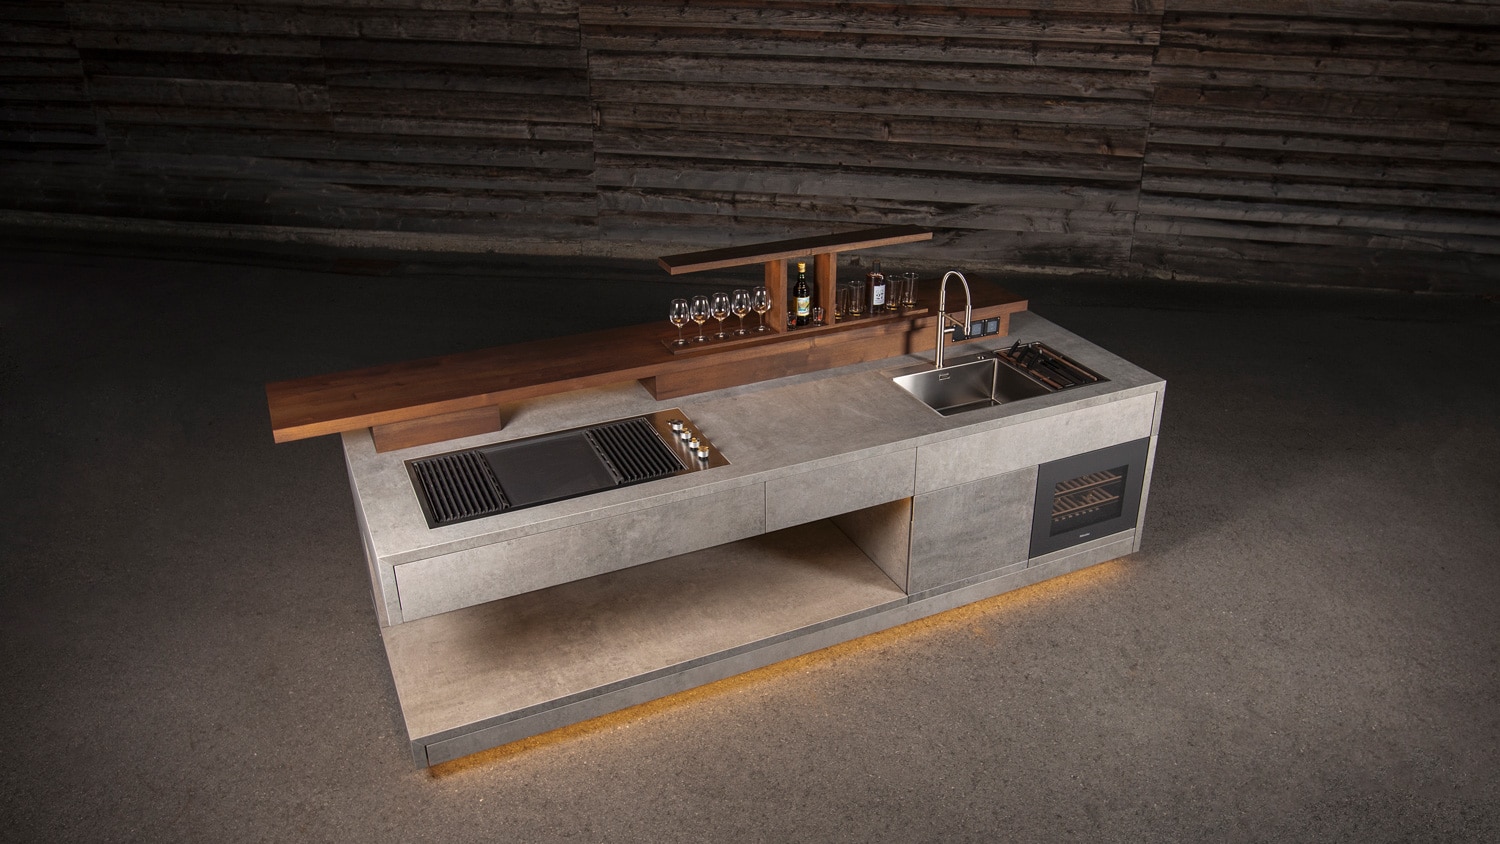 Image of Prime Two Widnau7 in The perfect rustic outdoor kitchen with Dekton and Urban Bonfire - Cosentino